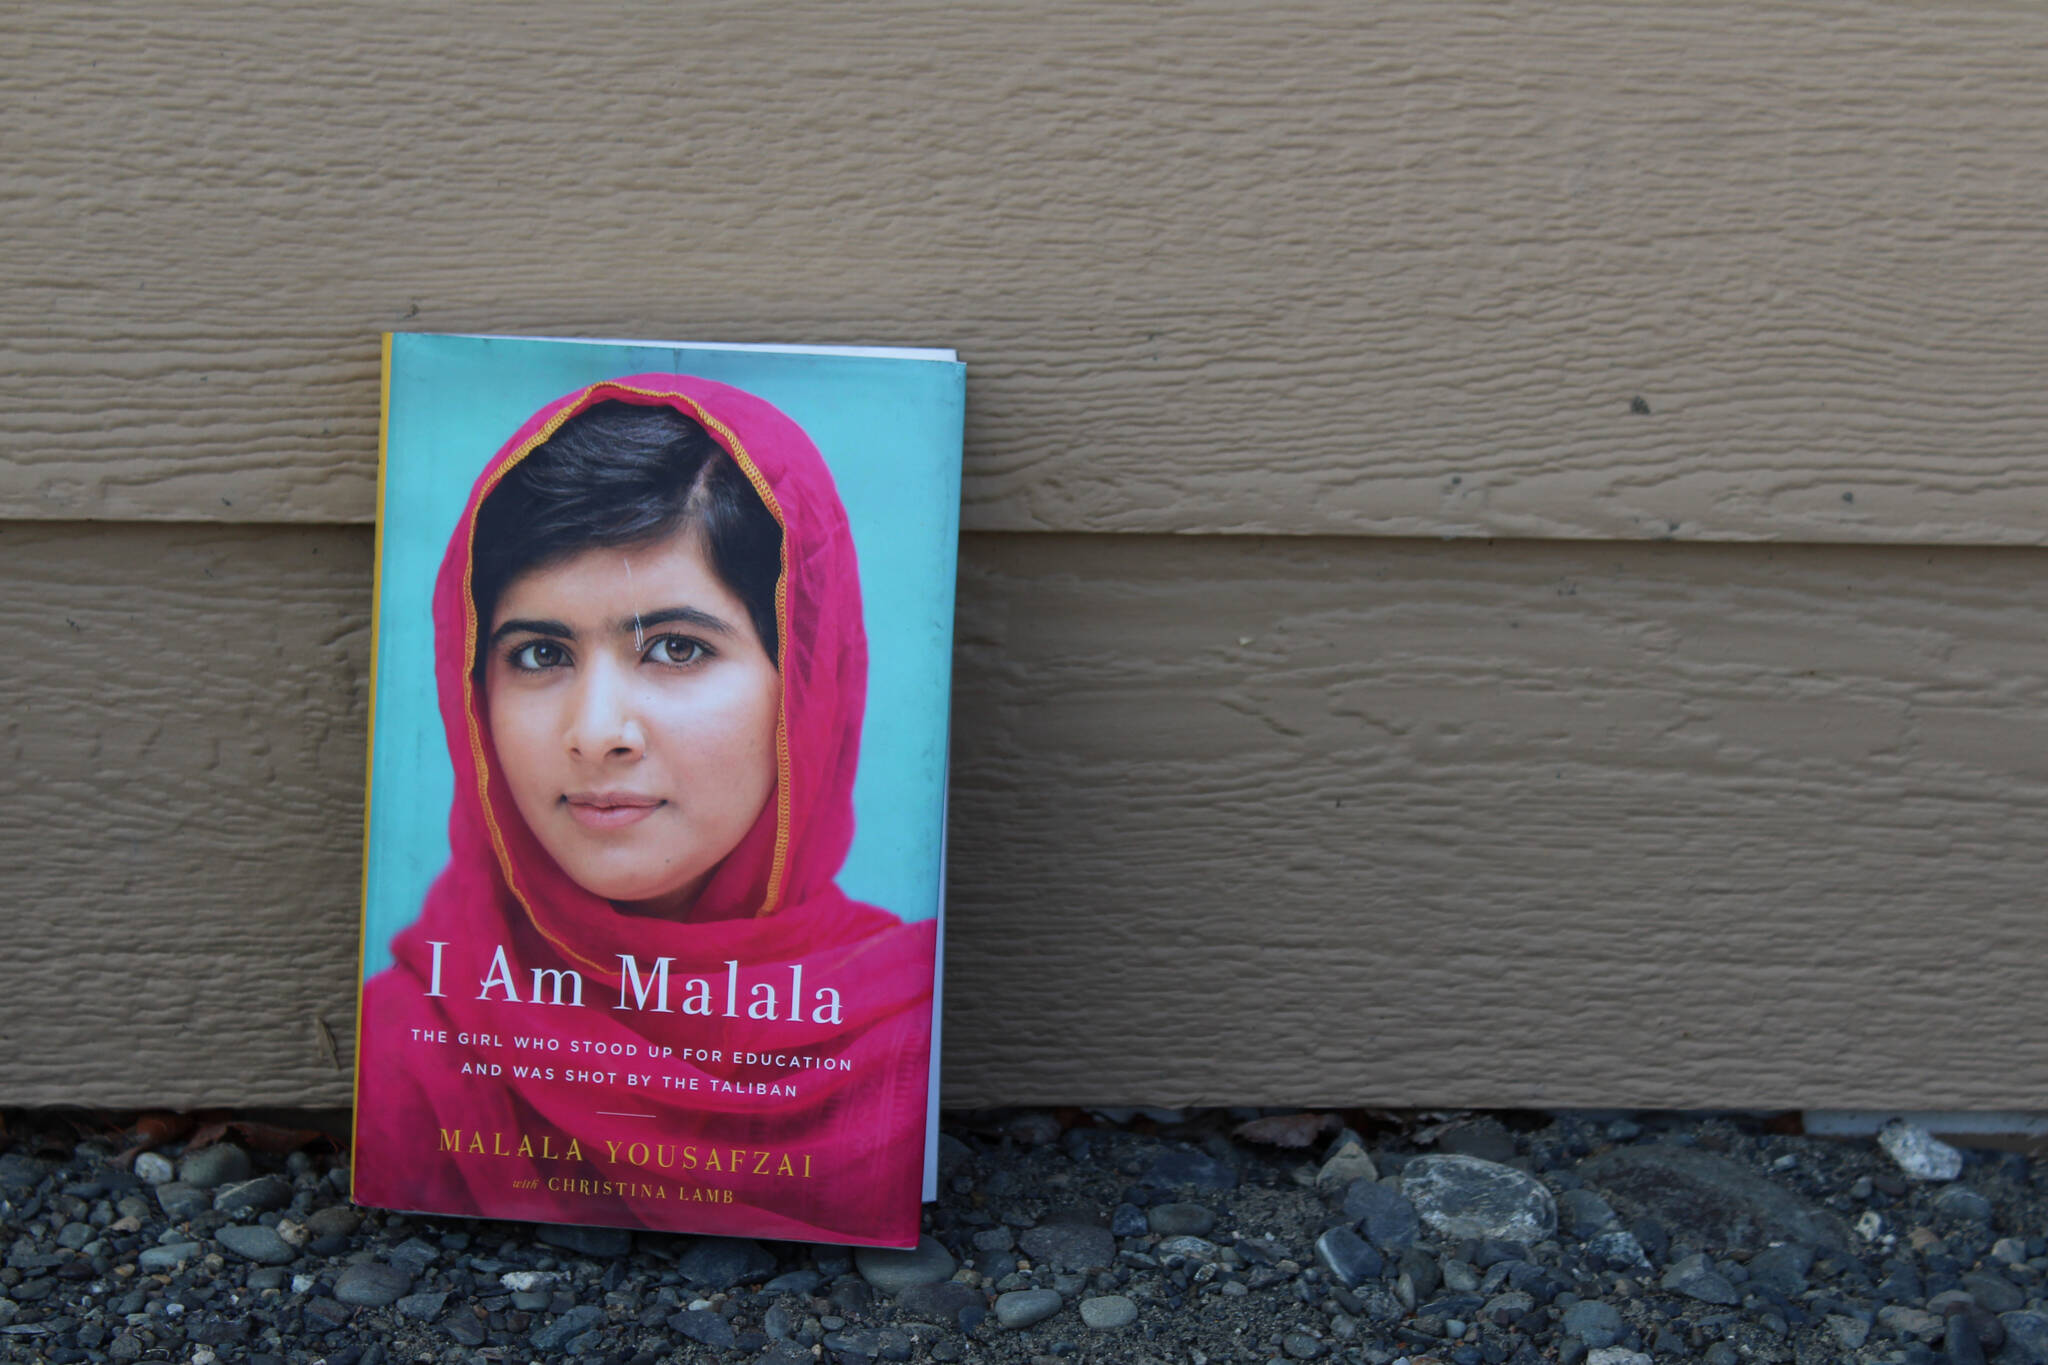 A copy of “I am Malala” is seen on Saturday, March 19, 2022, near Soldotna, Alaska. (Ashlyn O’Hara/Peninsula Clarion)